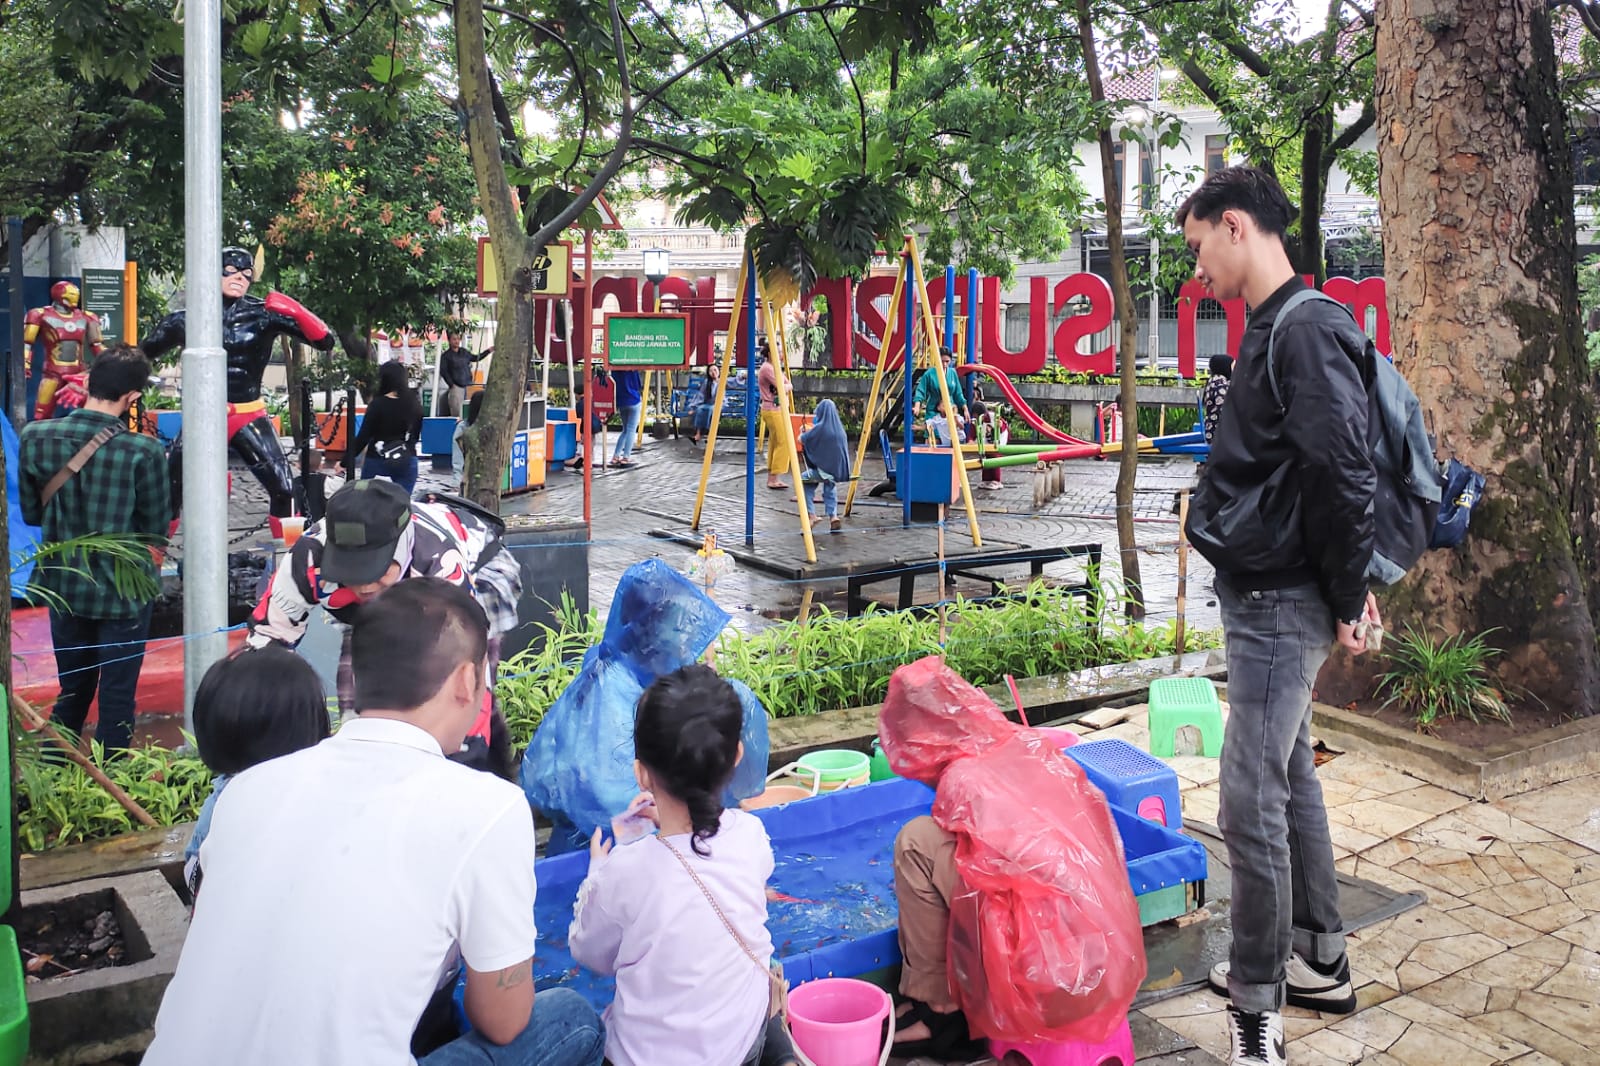 Murah, Taman Superhero Dijadikan Alternatif Wisata Oleh Masyarakat Kota Bandung